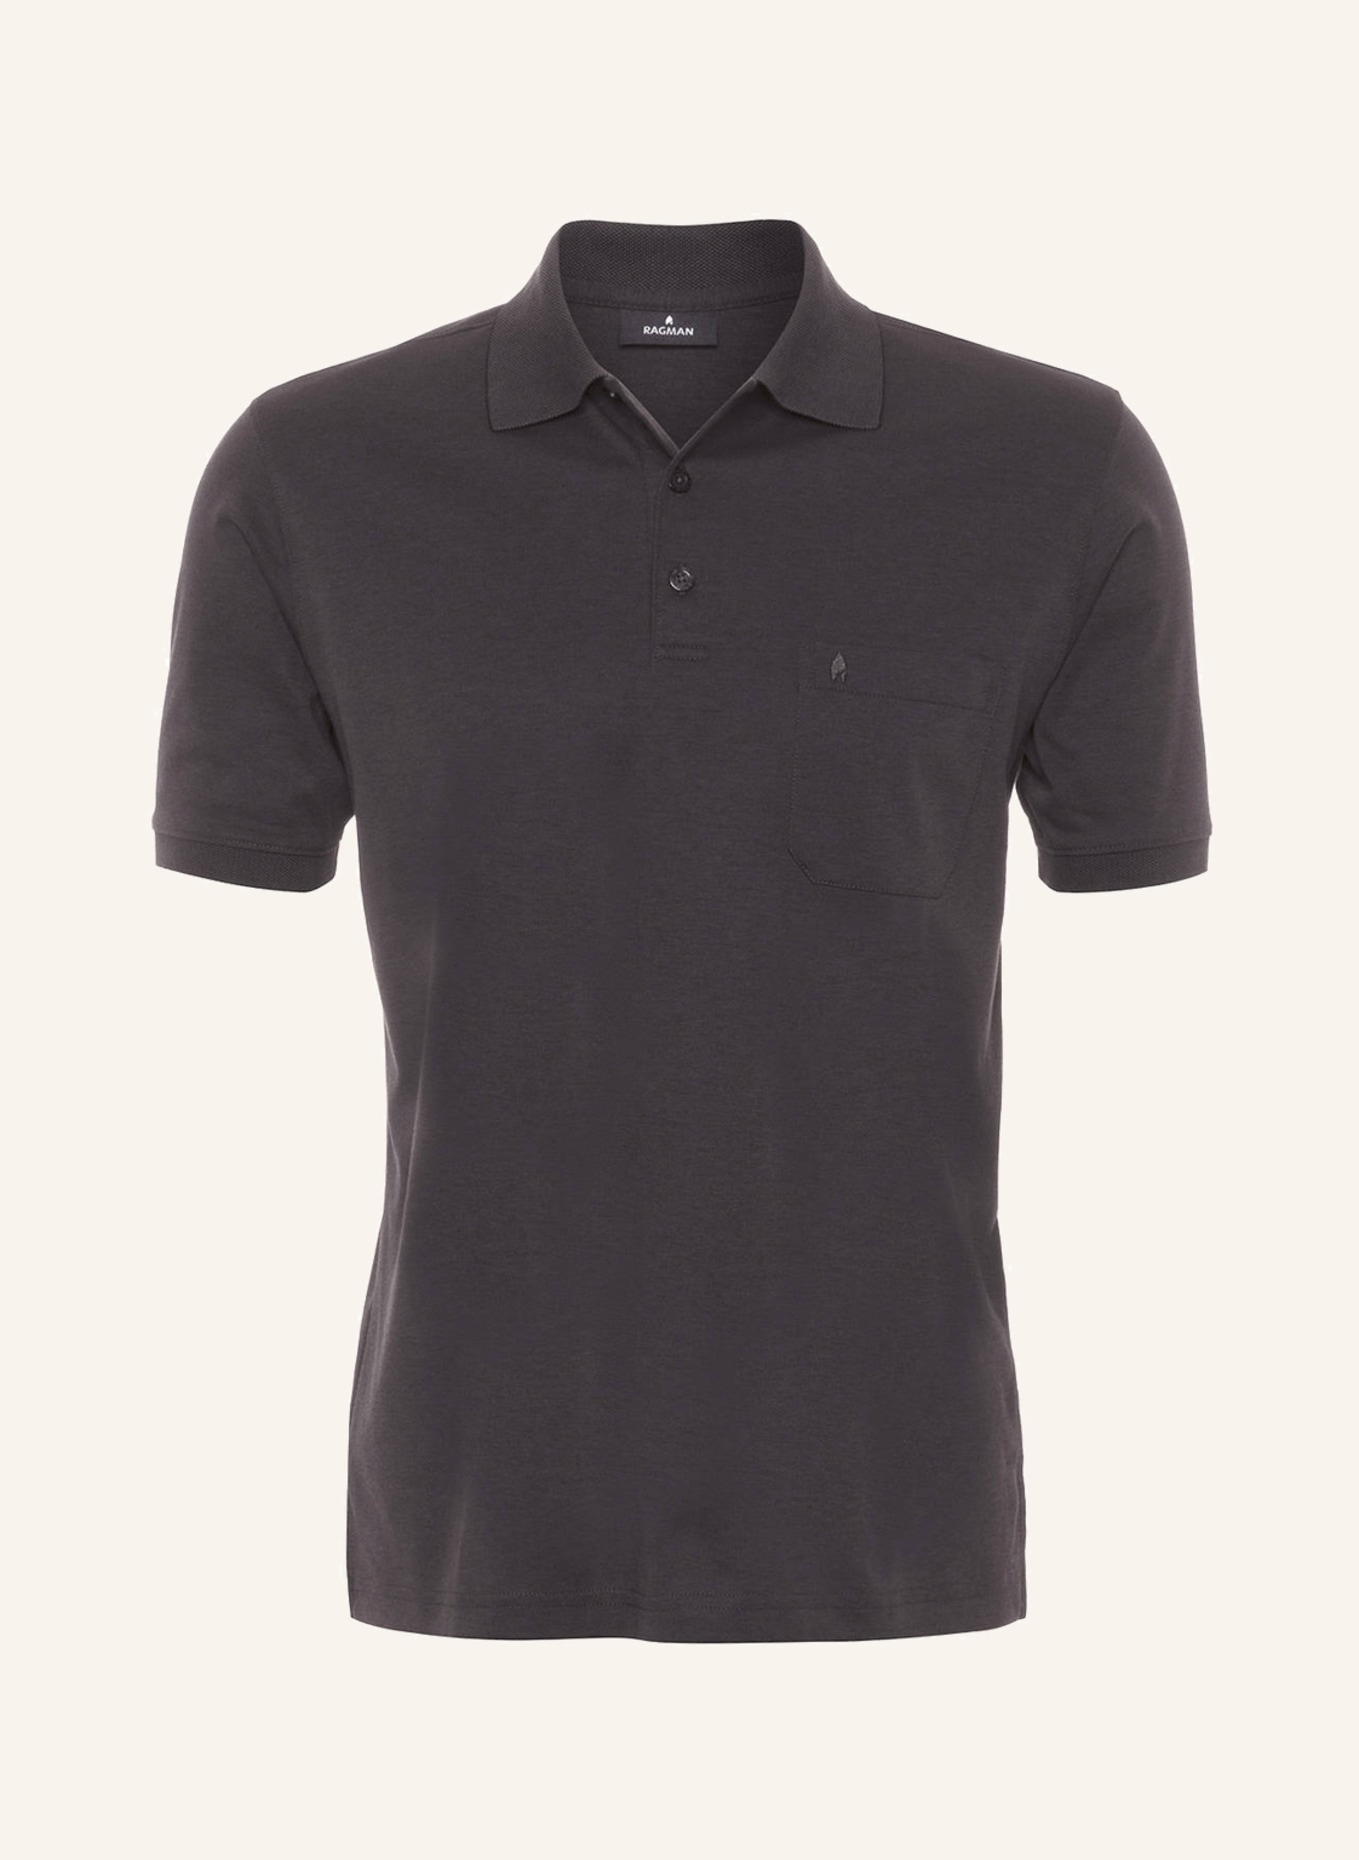 RAGMAN Piqué-Poloshirt , Farbe: ANTHRAZIT (Bild 1)